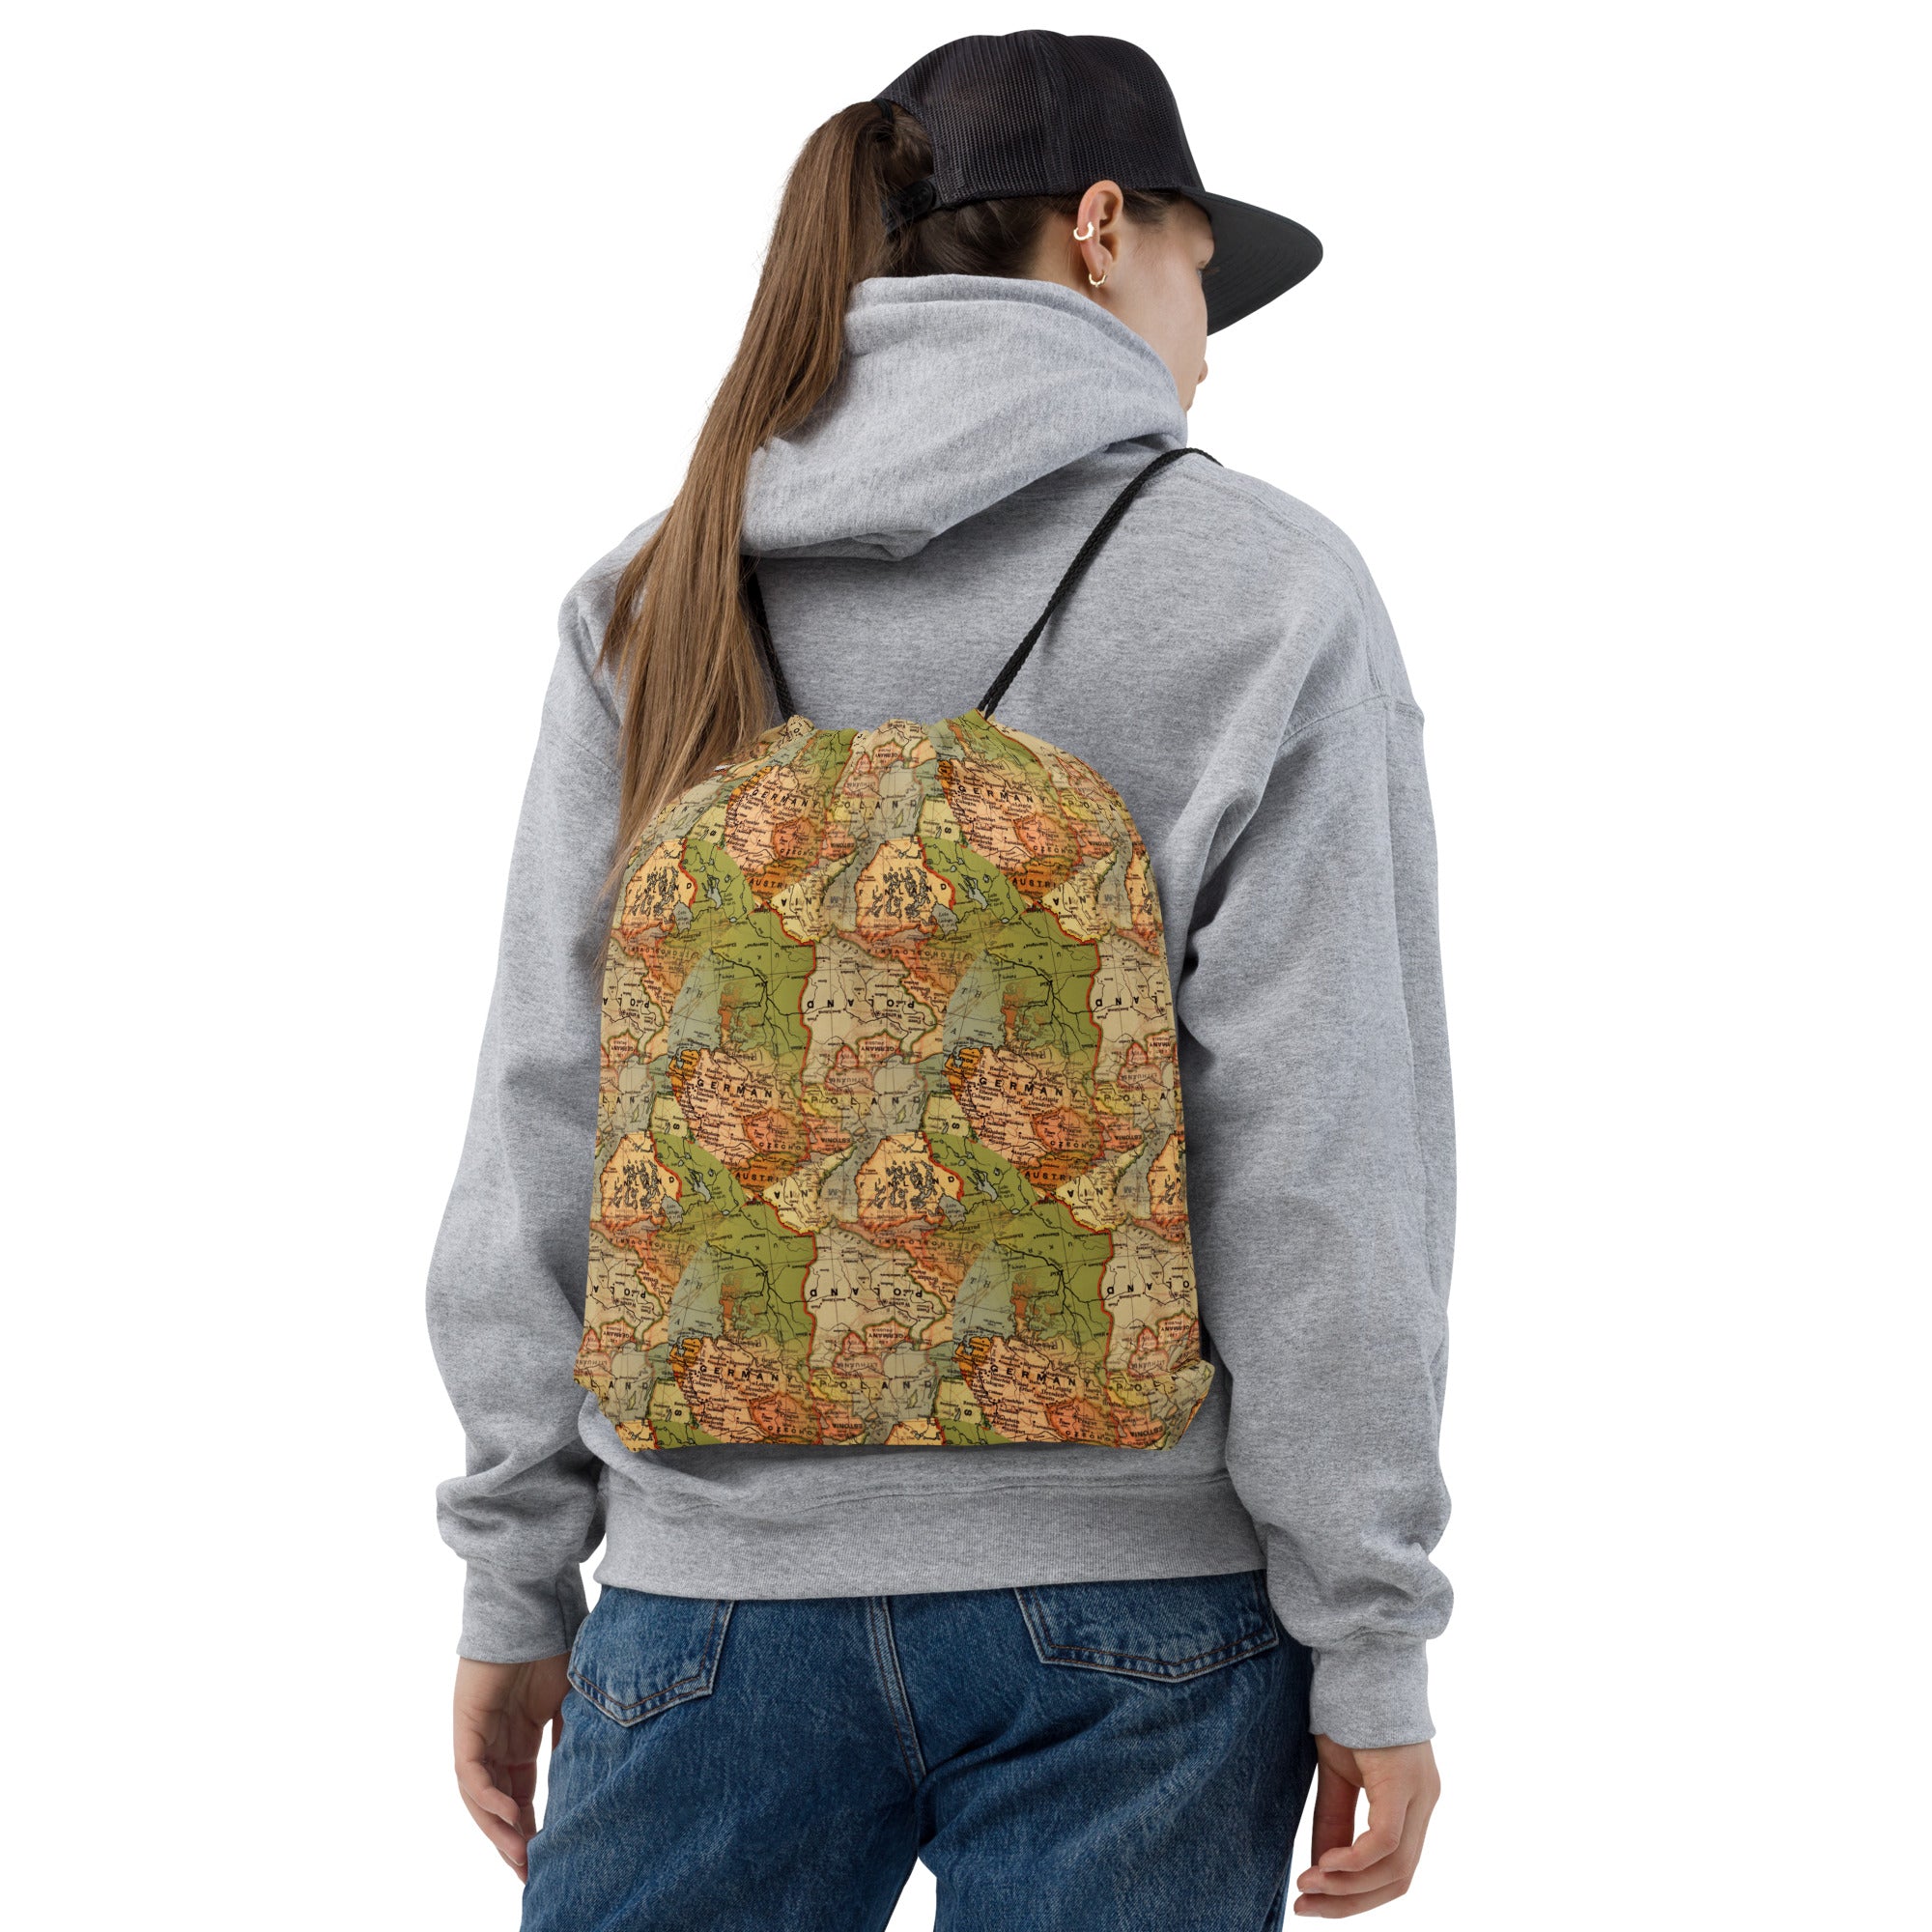 Drawstring bag, Drawstring closure bag, backpack,